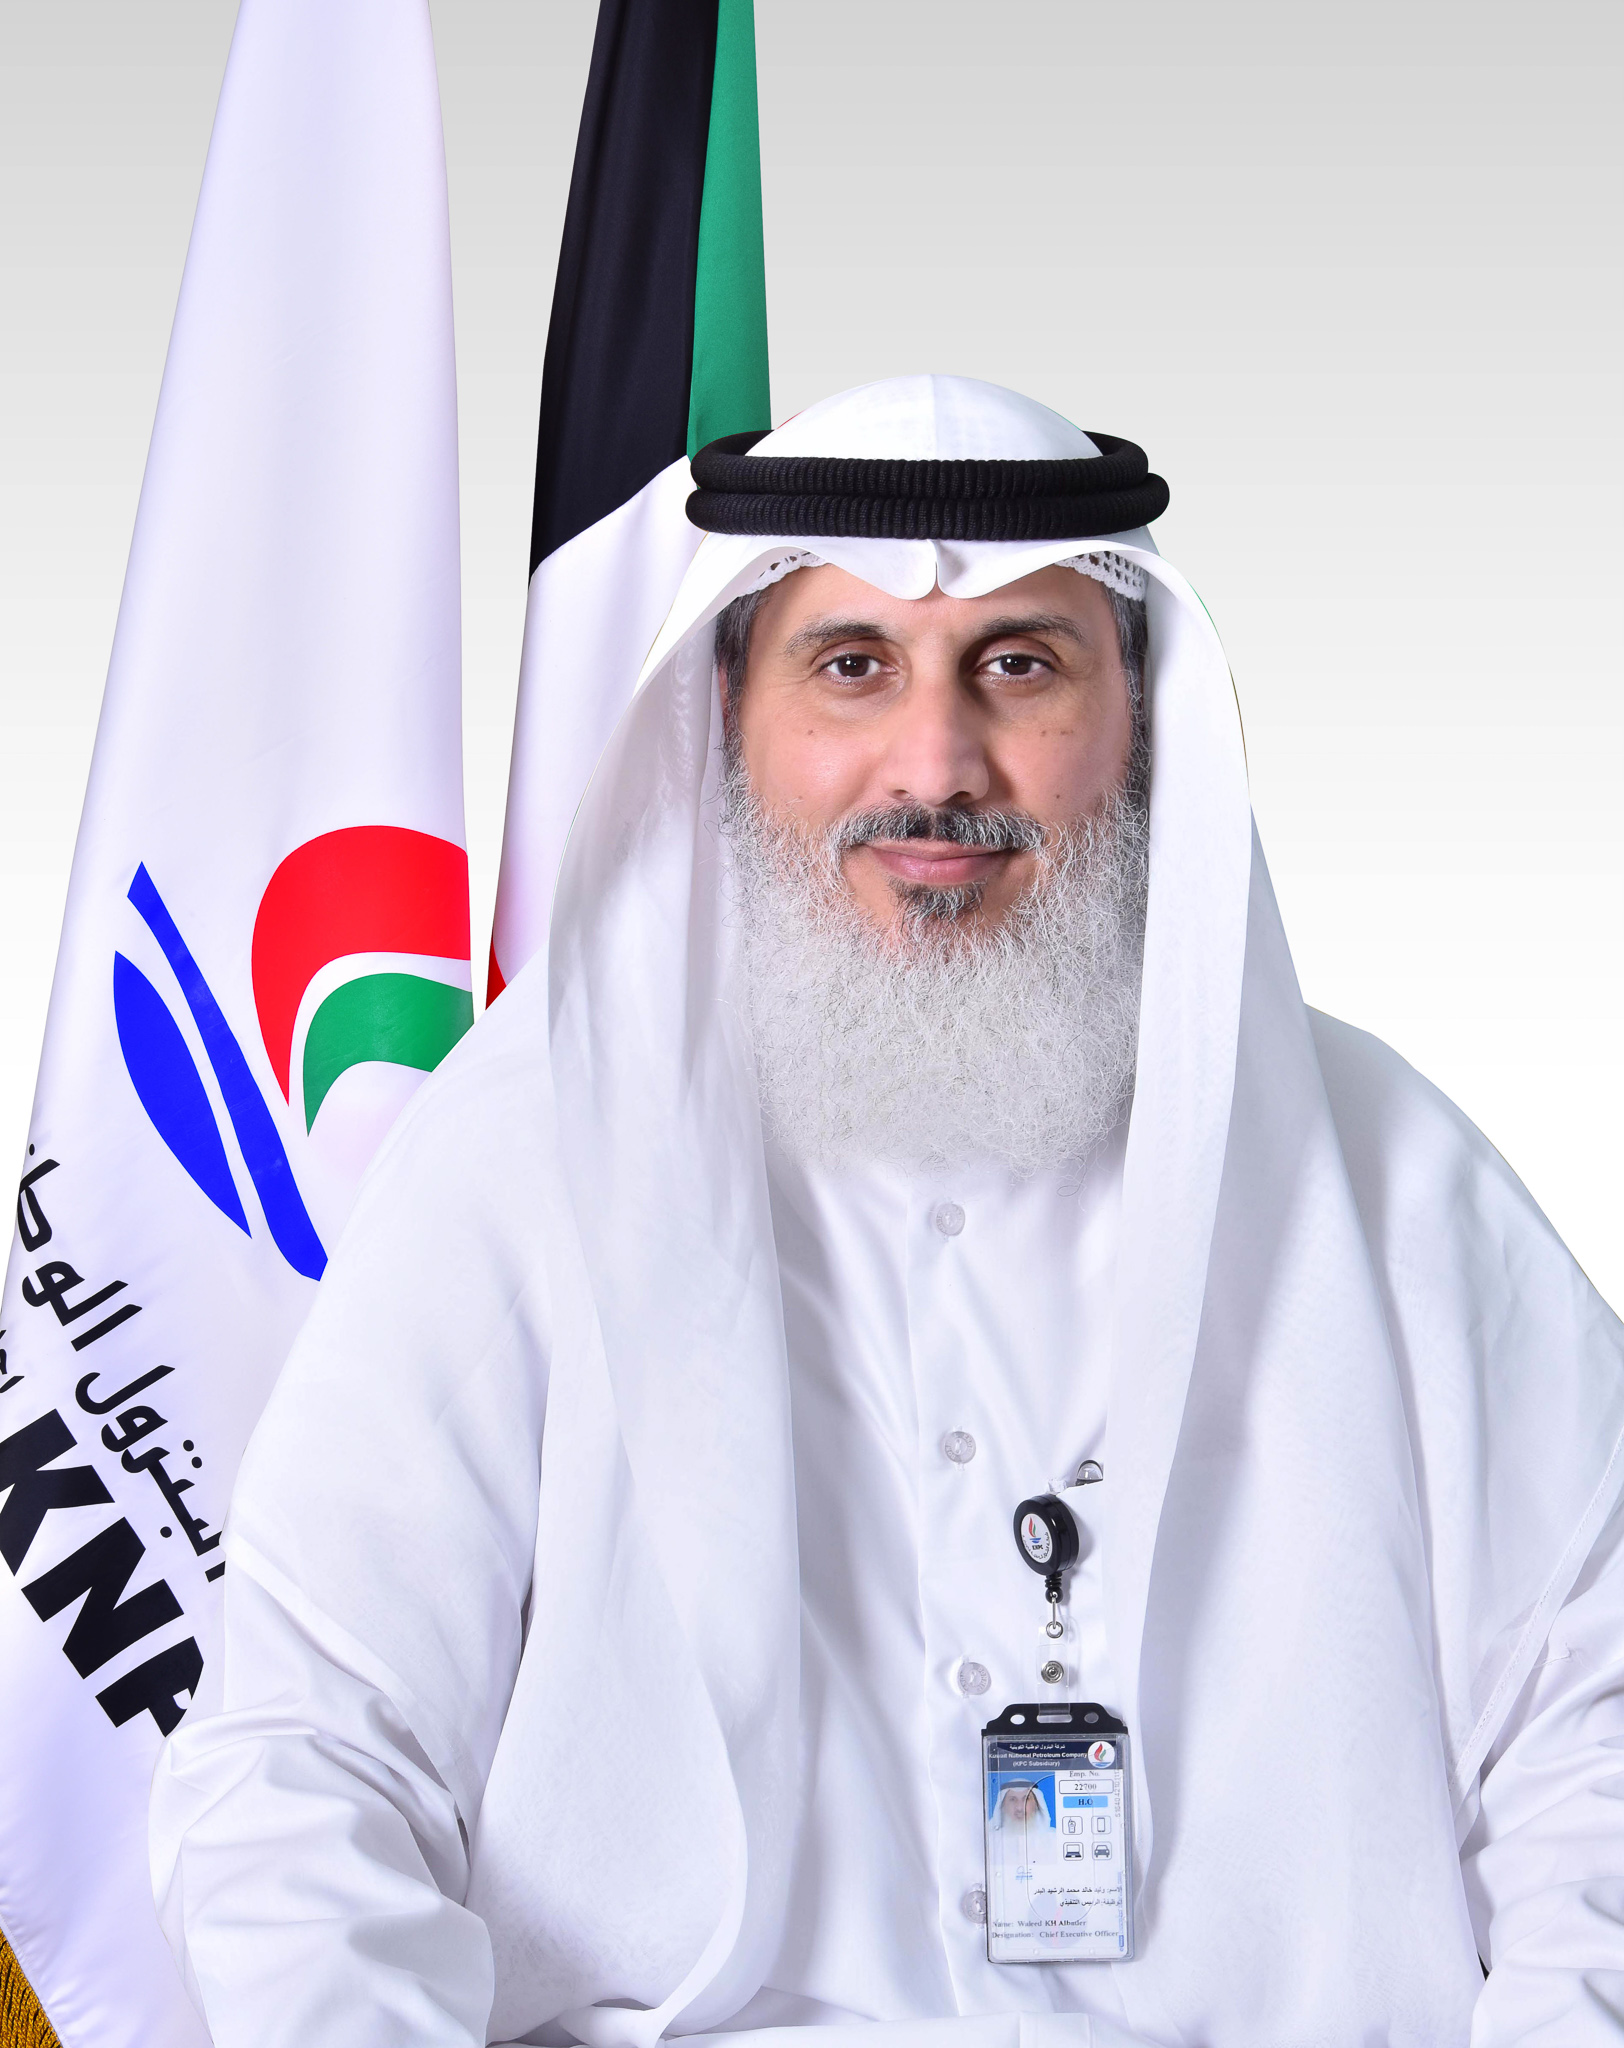 KNPC-CEO-Waleeb-Al-Bader-3-2.jpg